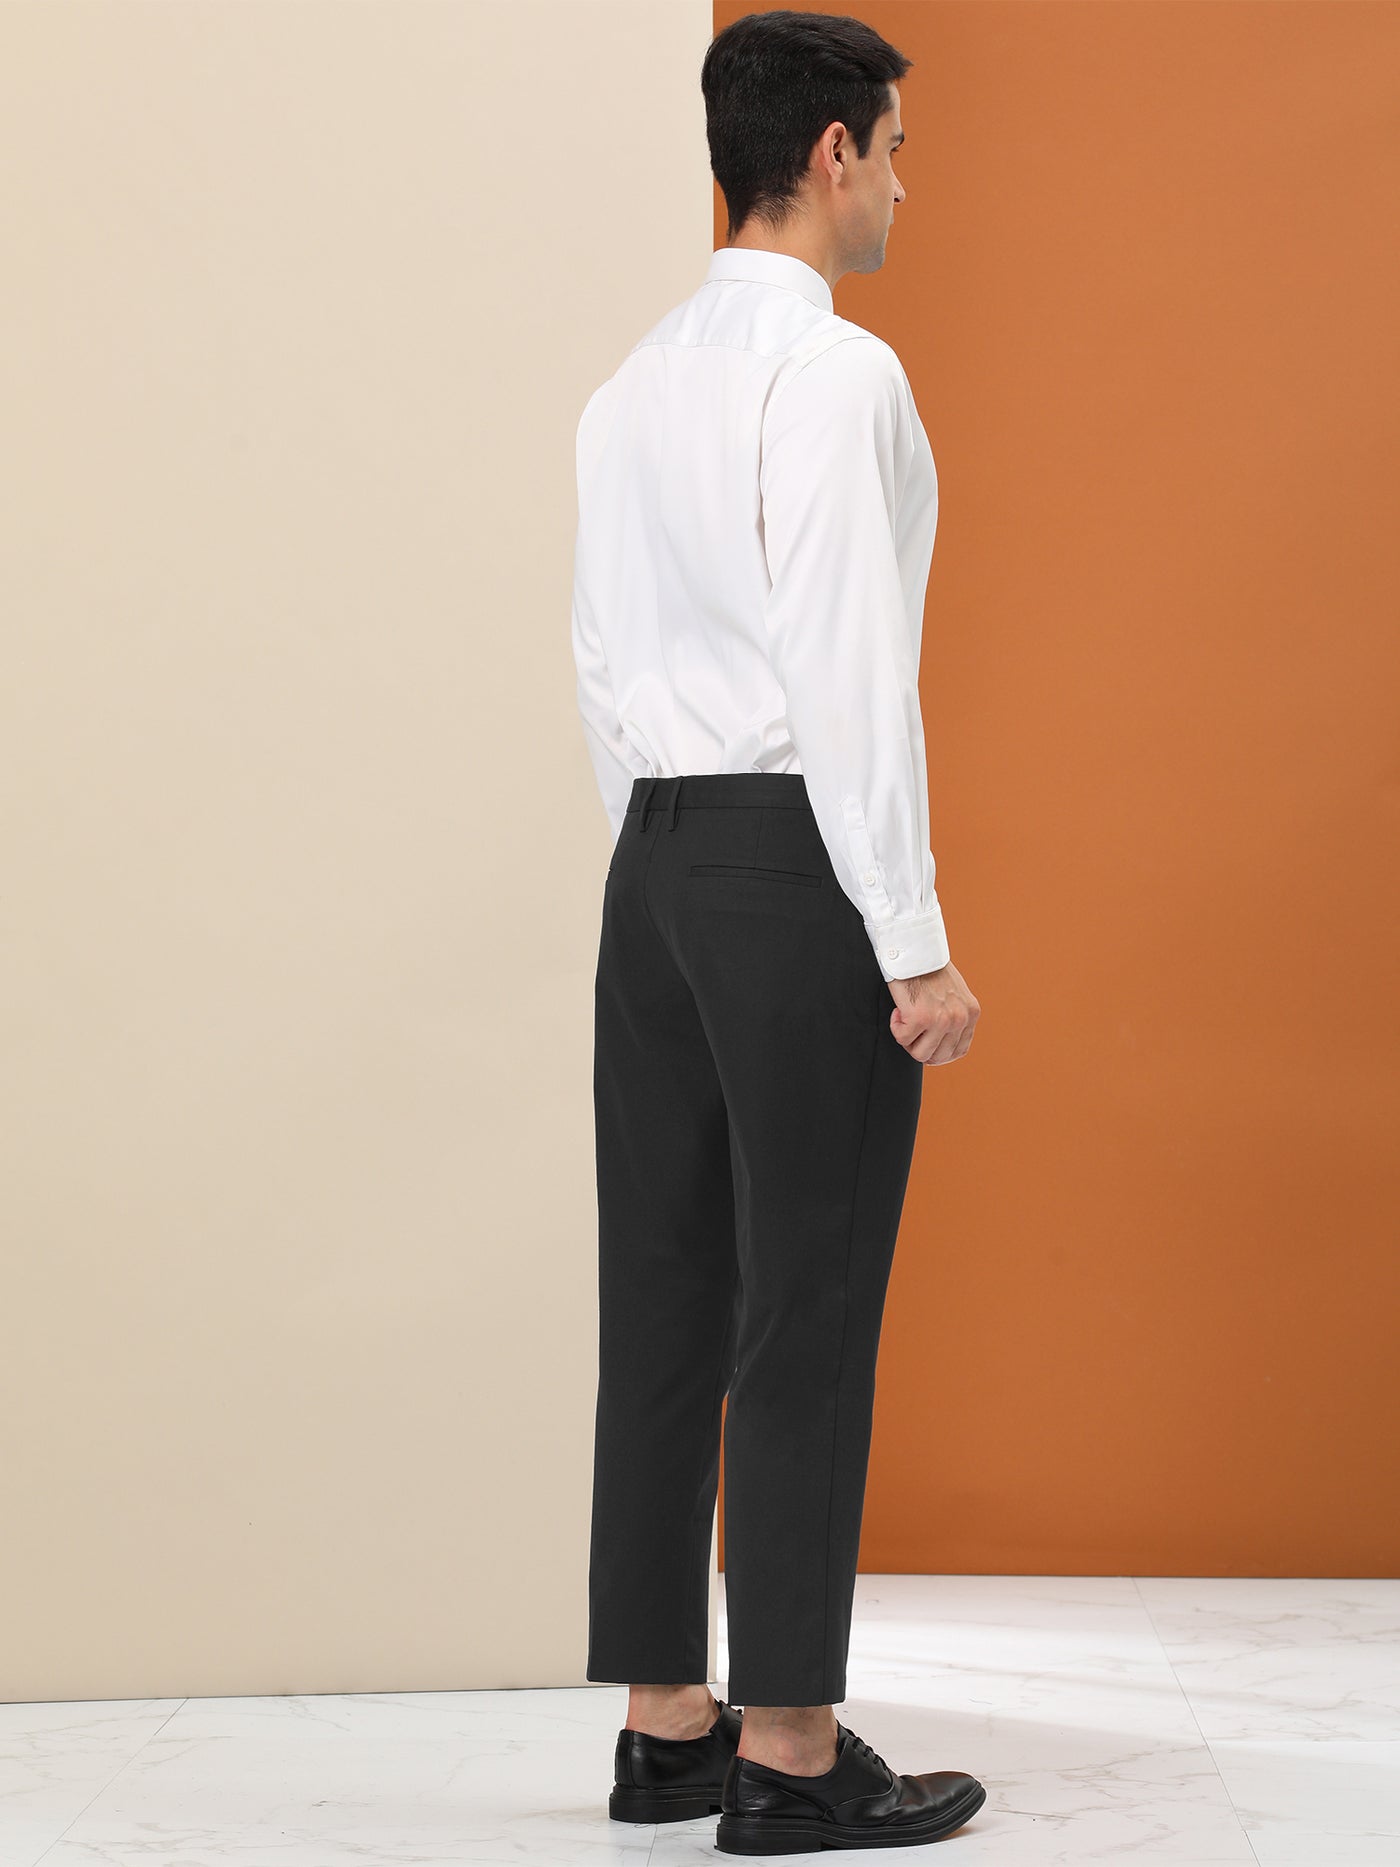 Bublédon Men's Cropped Flat Front Ankle-Length Skinny Business Dress Pants